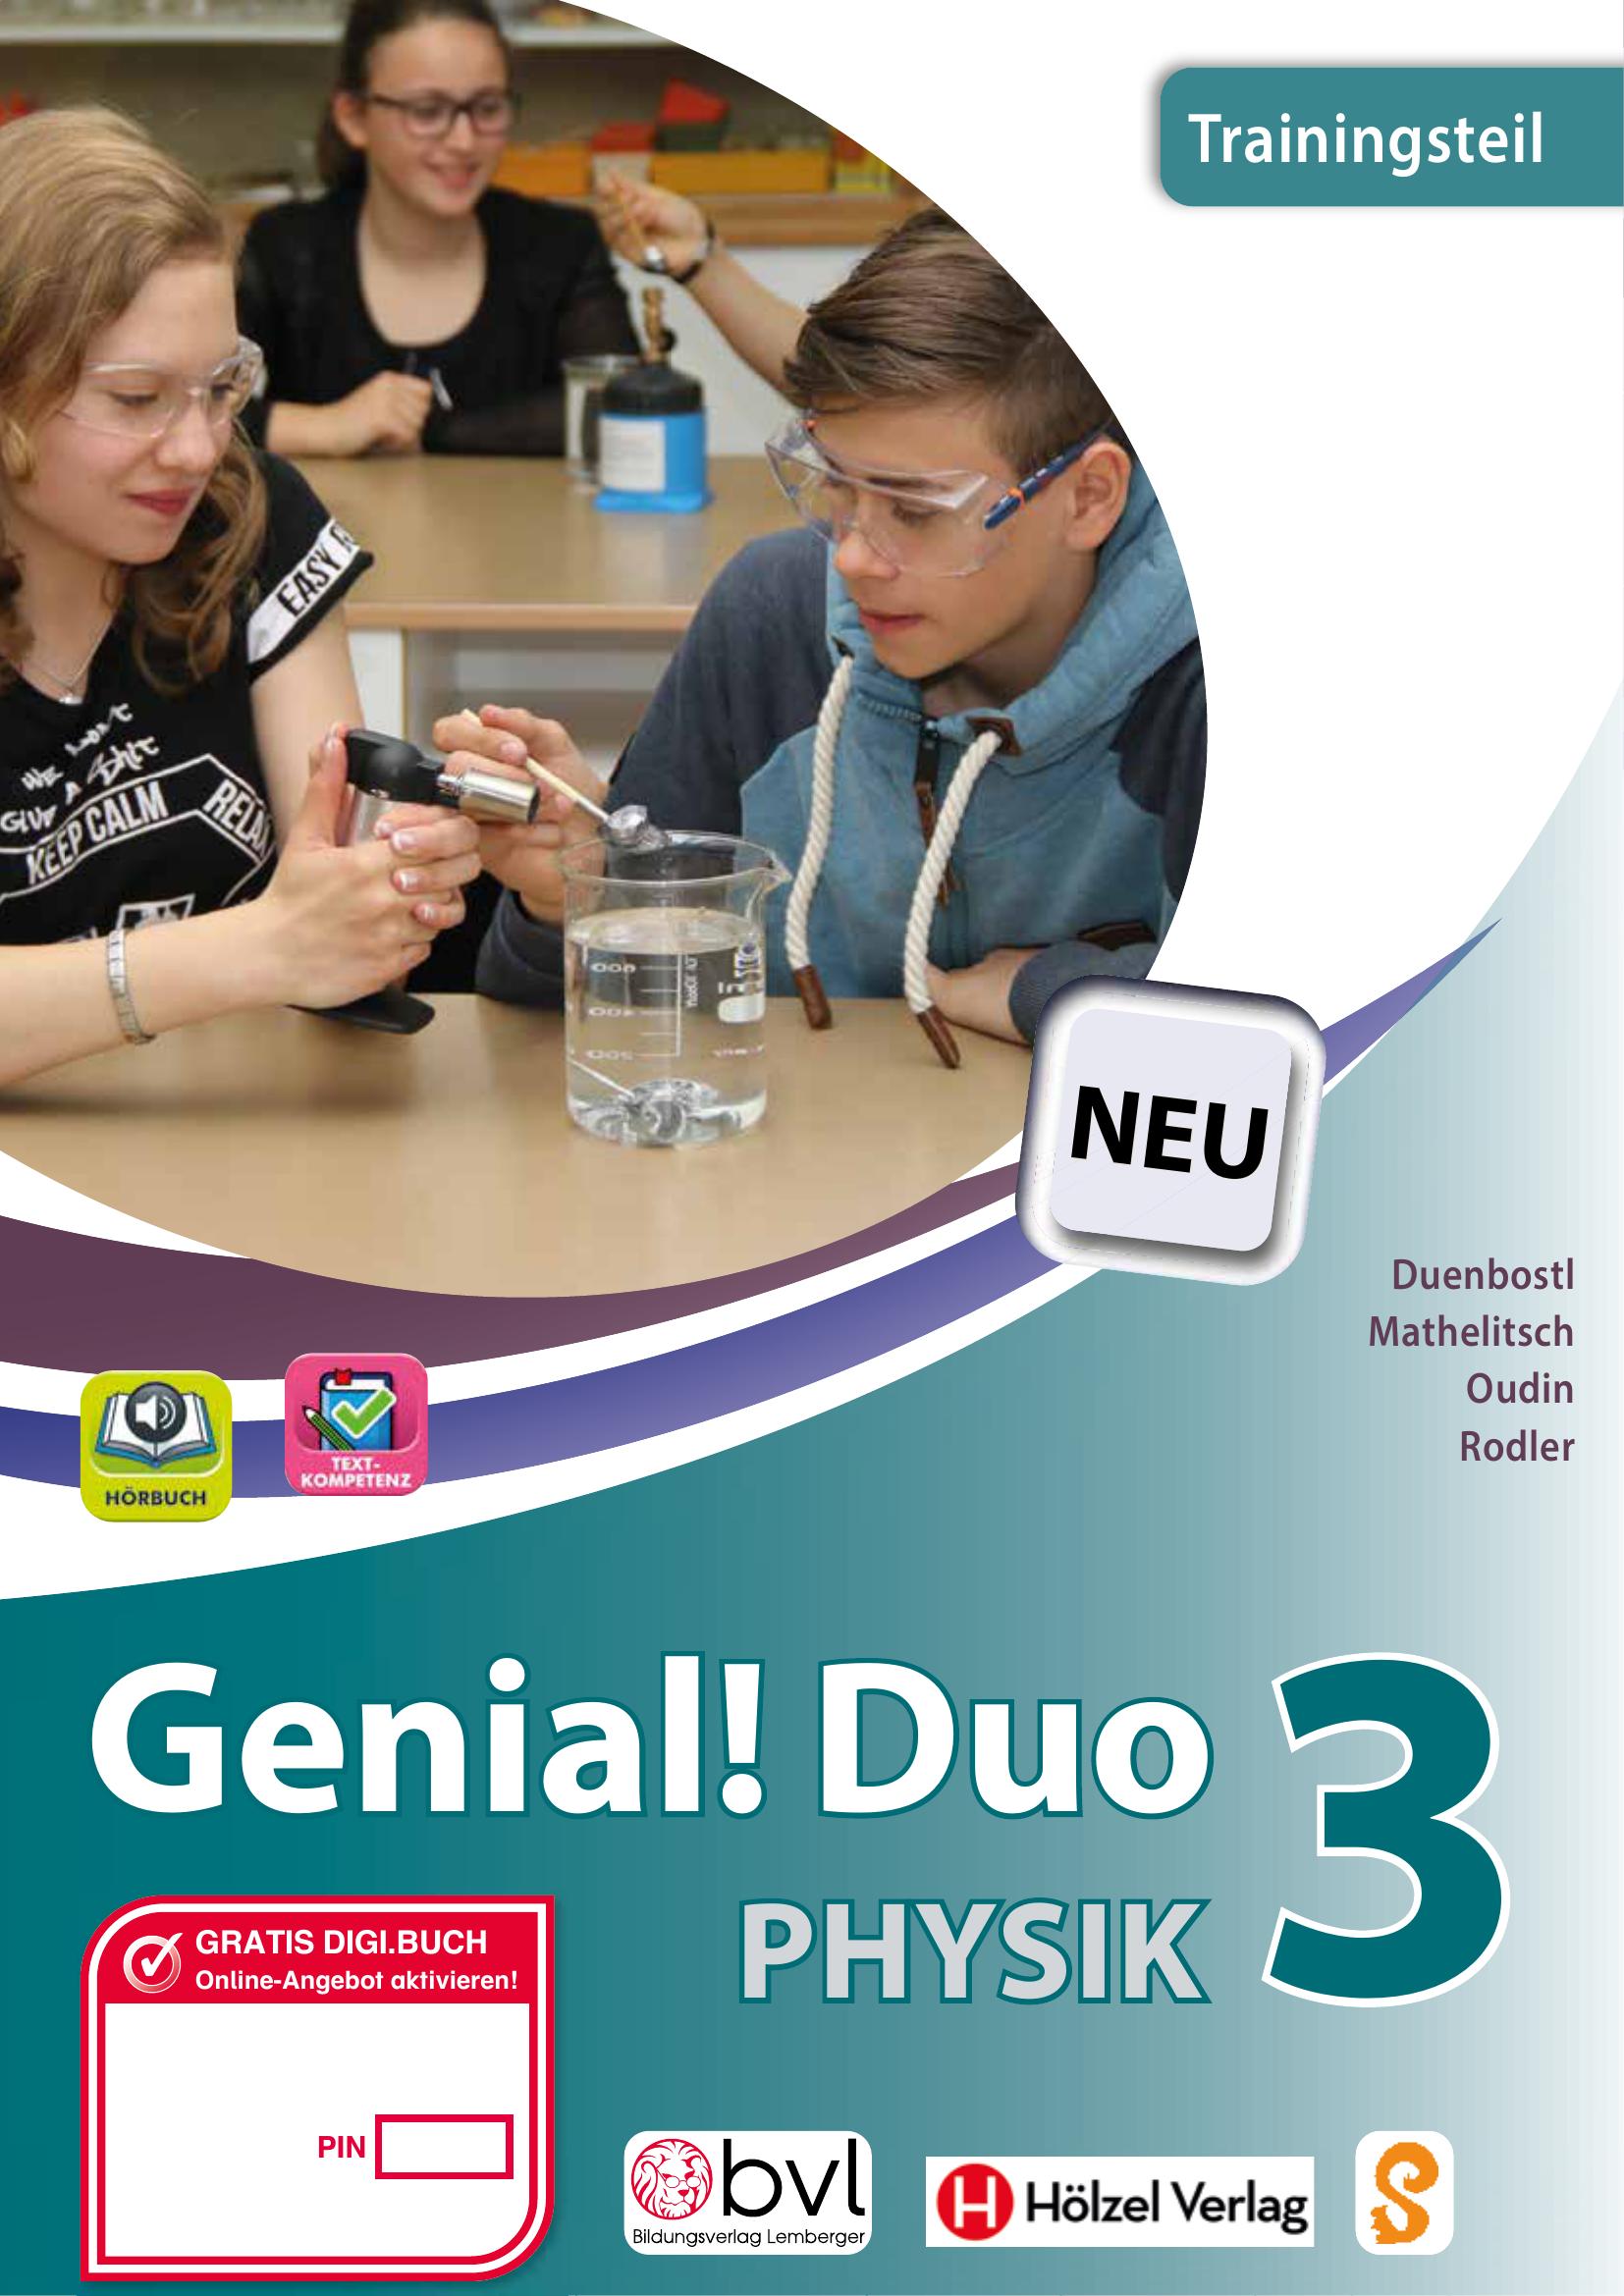 Genial! DUO Physik 3 – Trainings-Teil PLUS-Lizenz mit eSquirrel